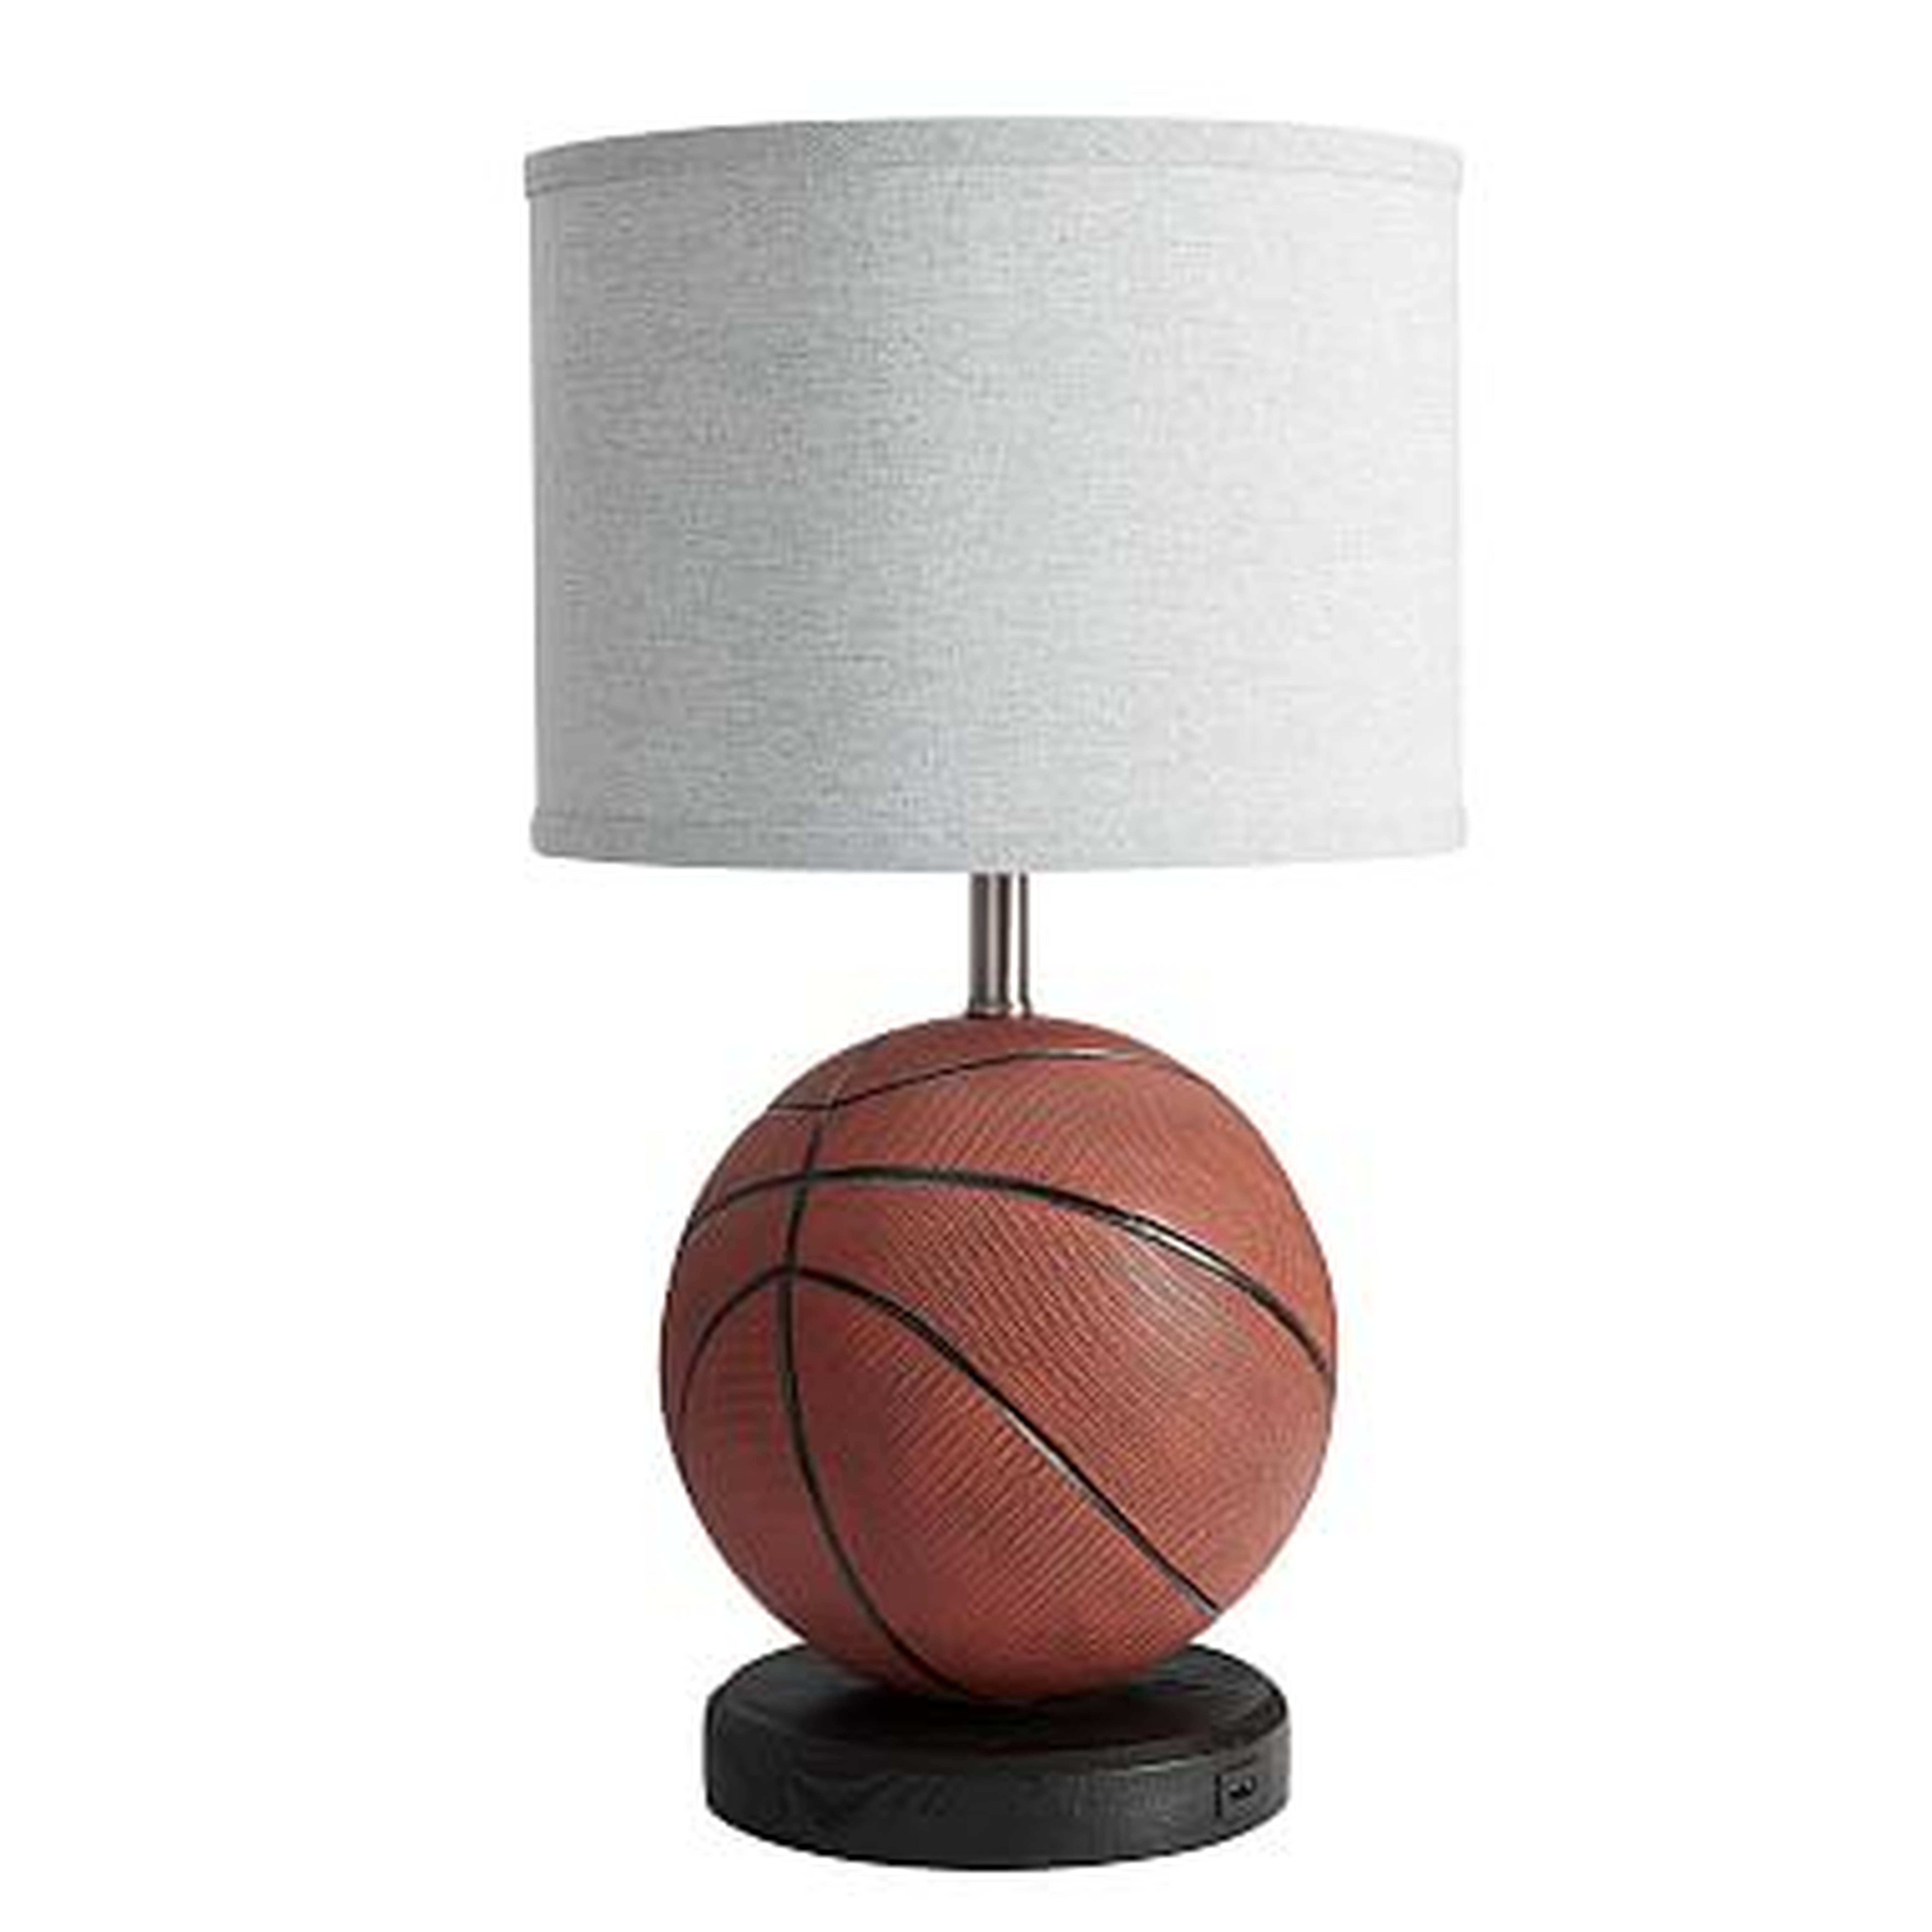 Basketball Table Lamp with USB, Brown - Pottery Barn Teen